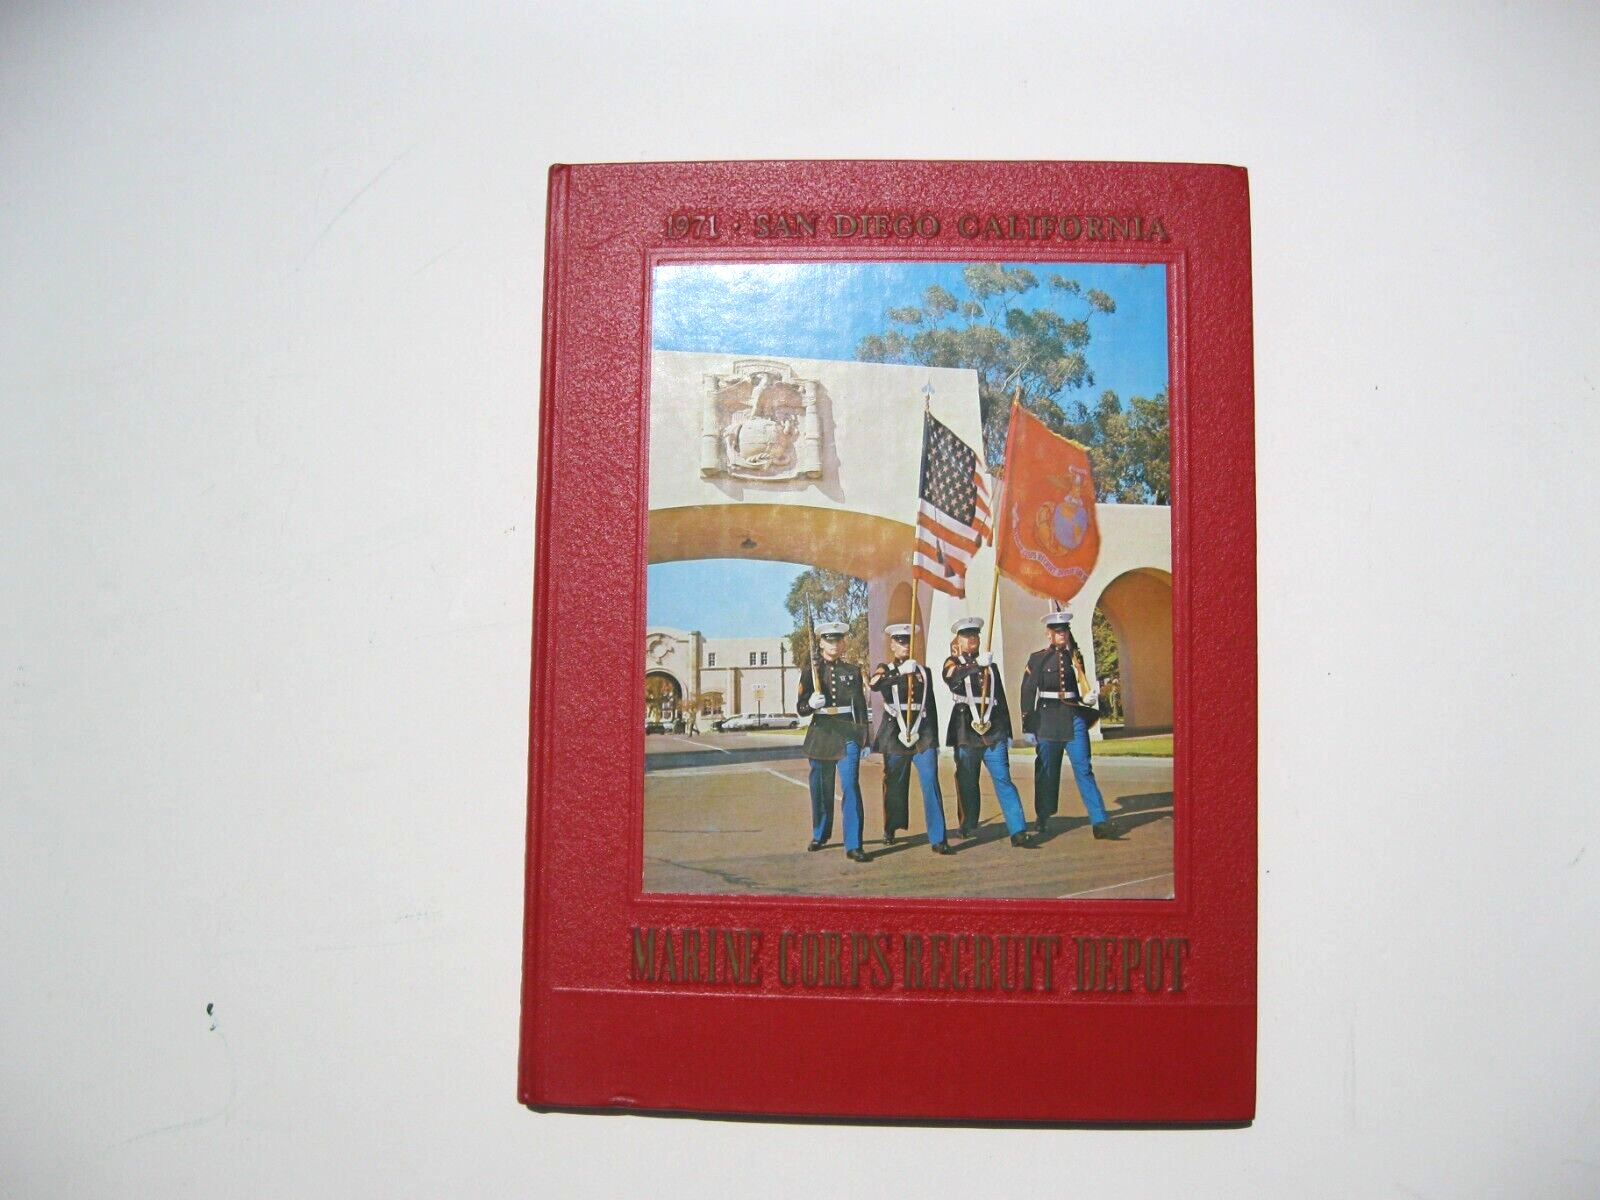 USMC MCRD San Diego 1971 Yearbook Platoon 3069 Commenced Training 19/7/71